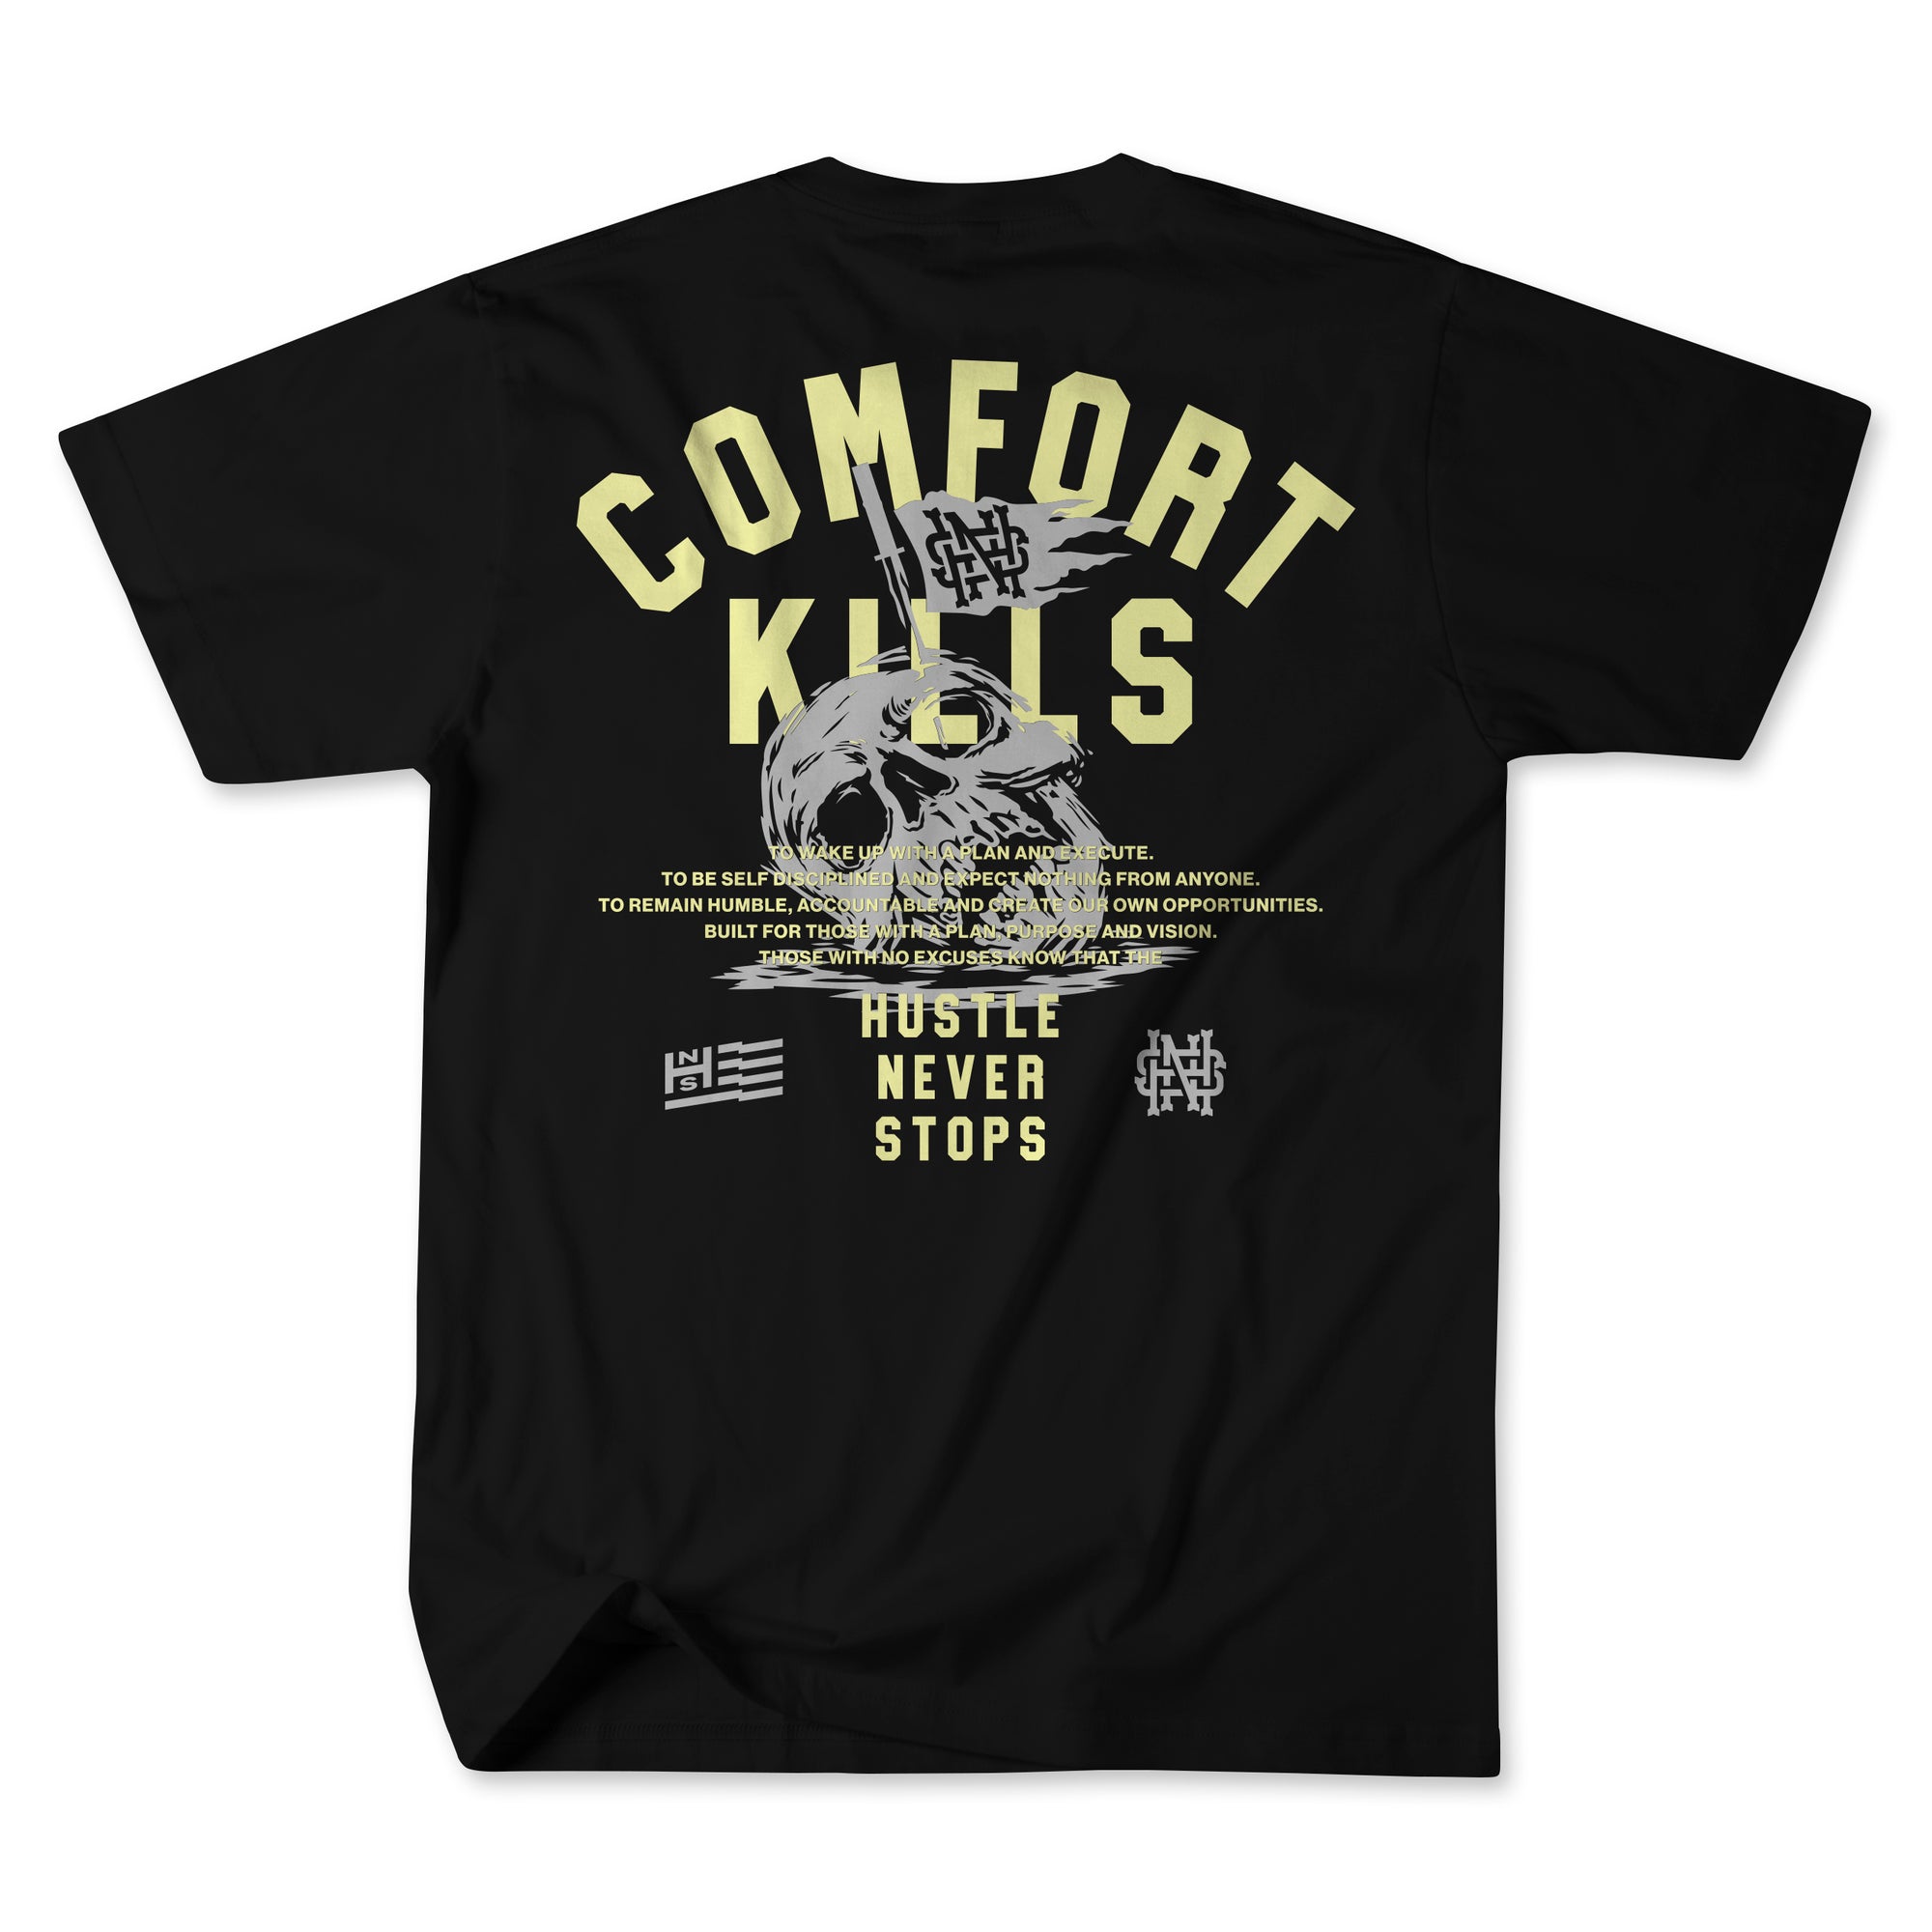 Comfort Kills